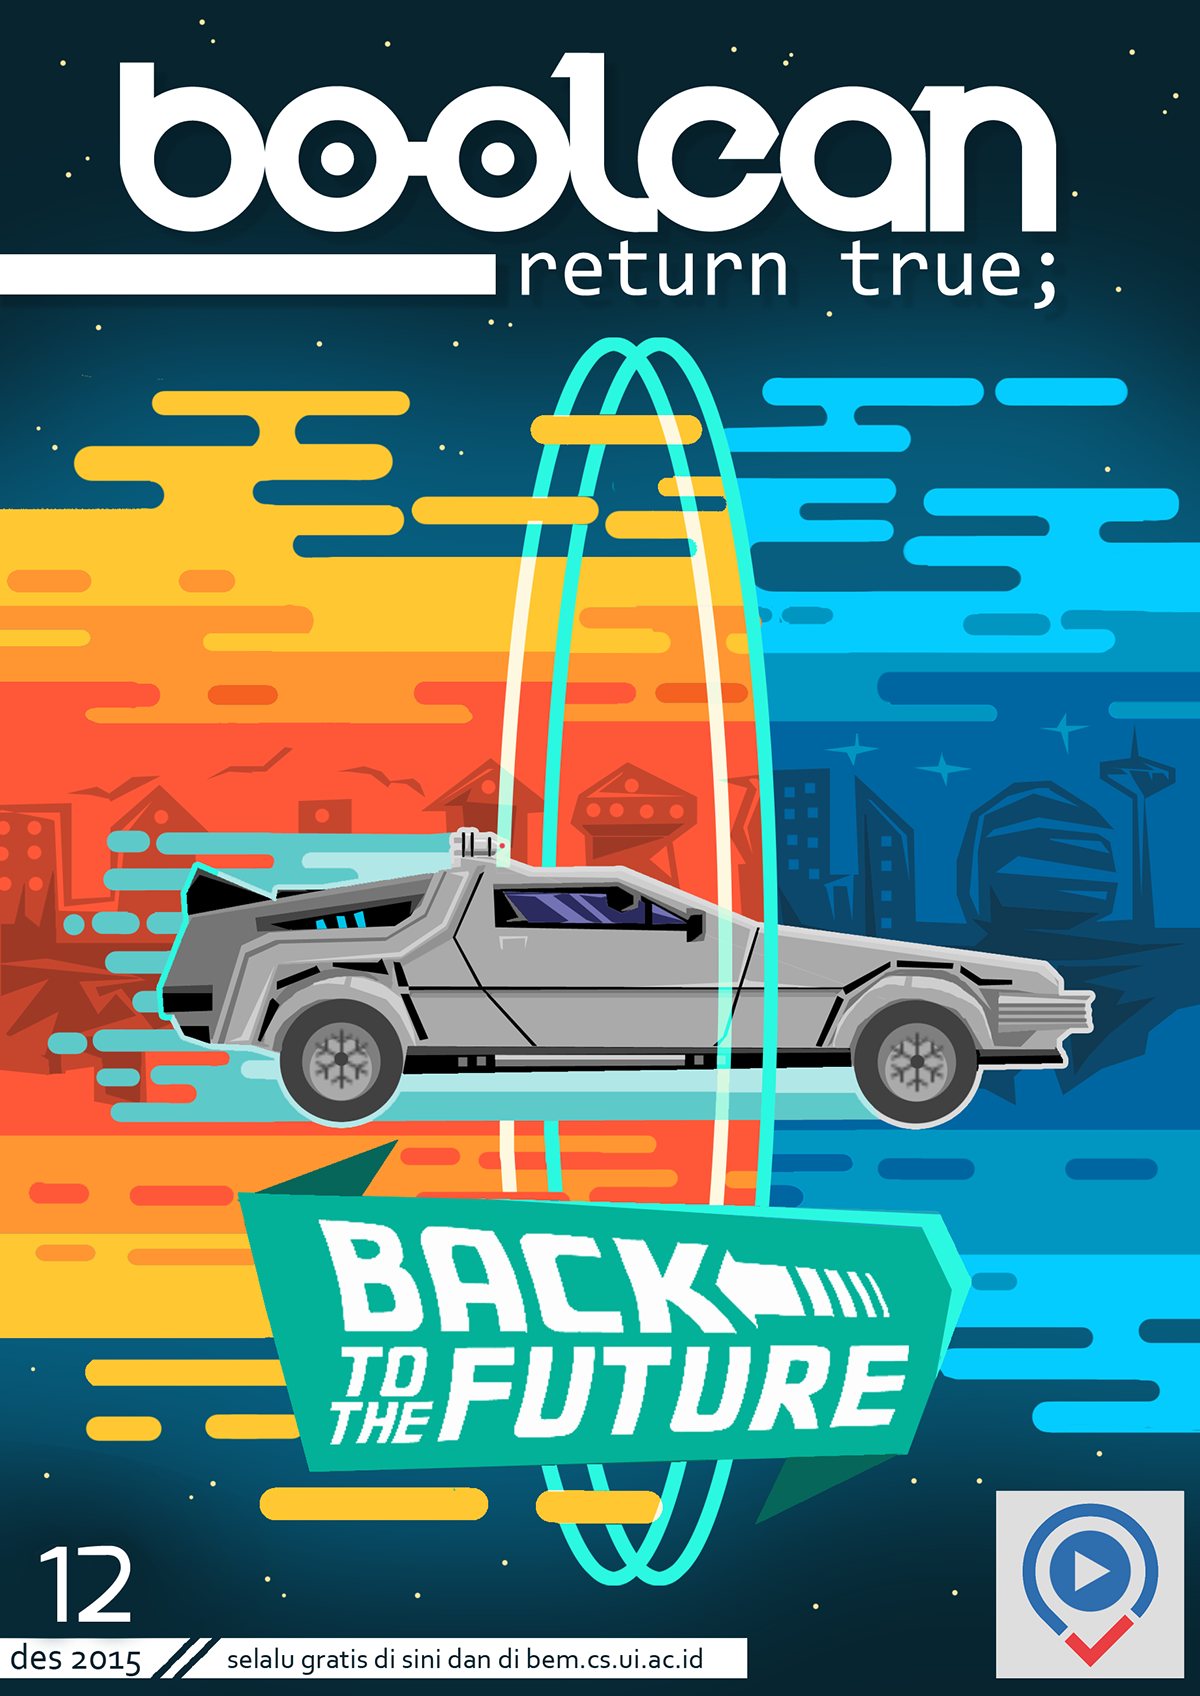 bttf back to the future DeLorean cover Boolean Fasilkom then and now